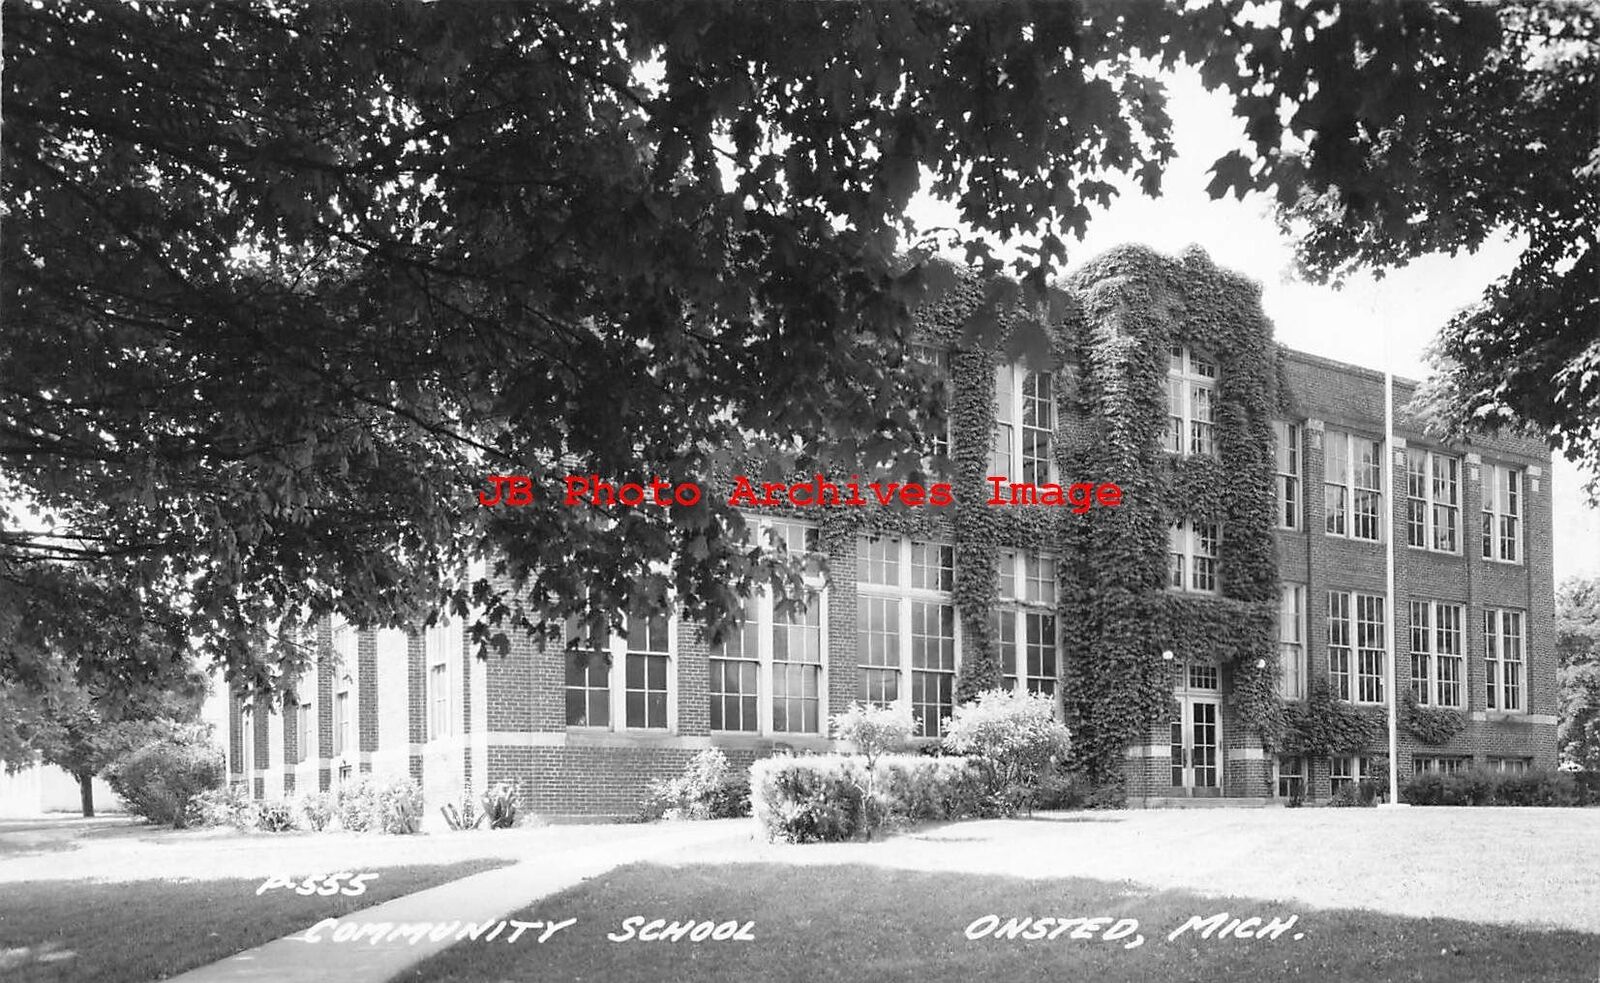 MI, Onsted, Michigan, RPPC, Community School, 1952 PM, Cook Photo No P555